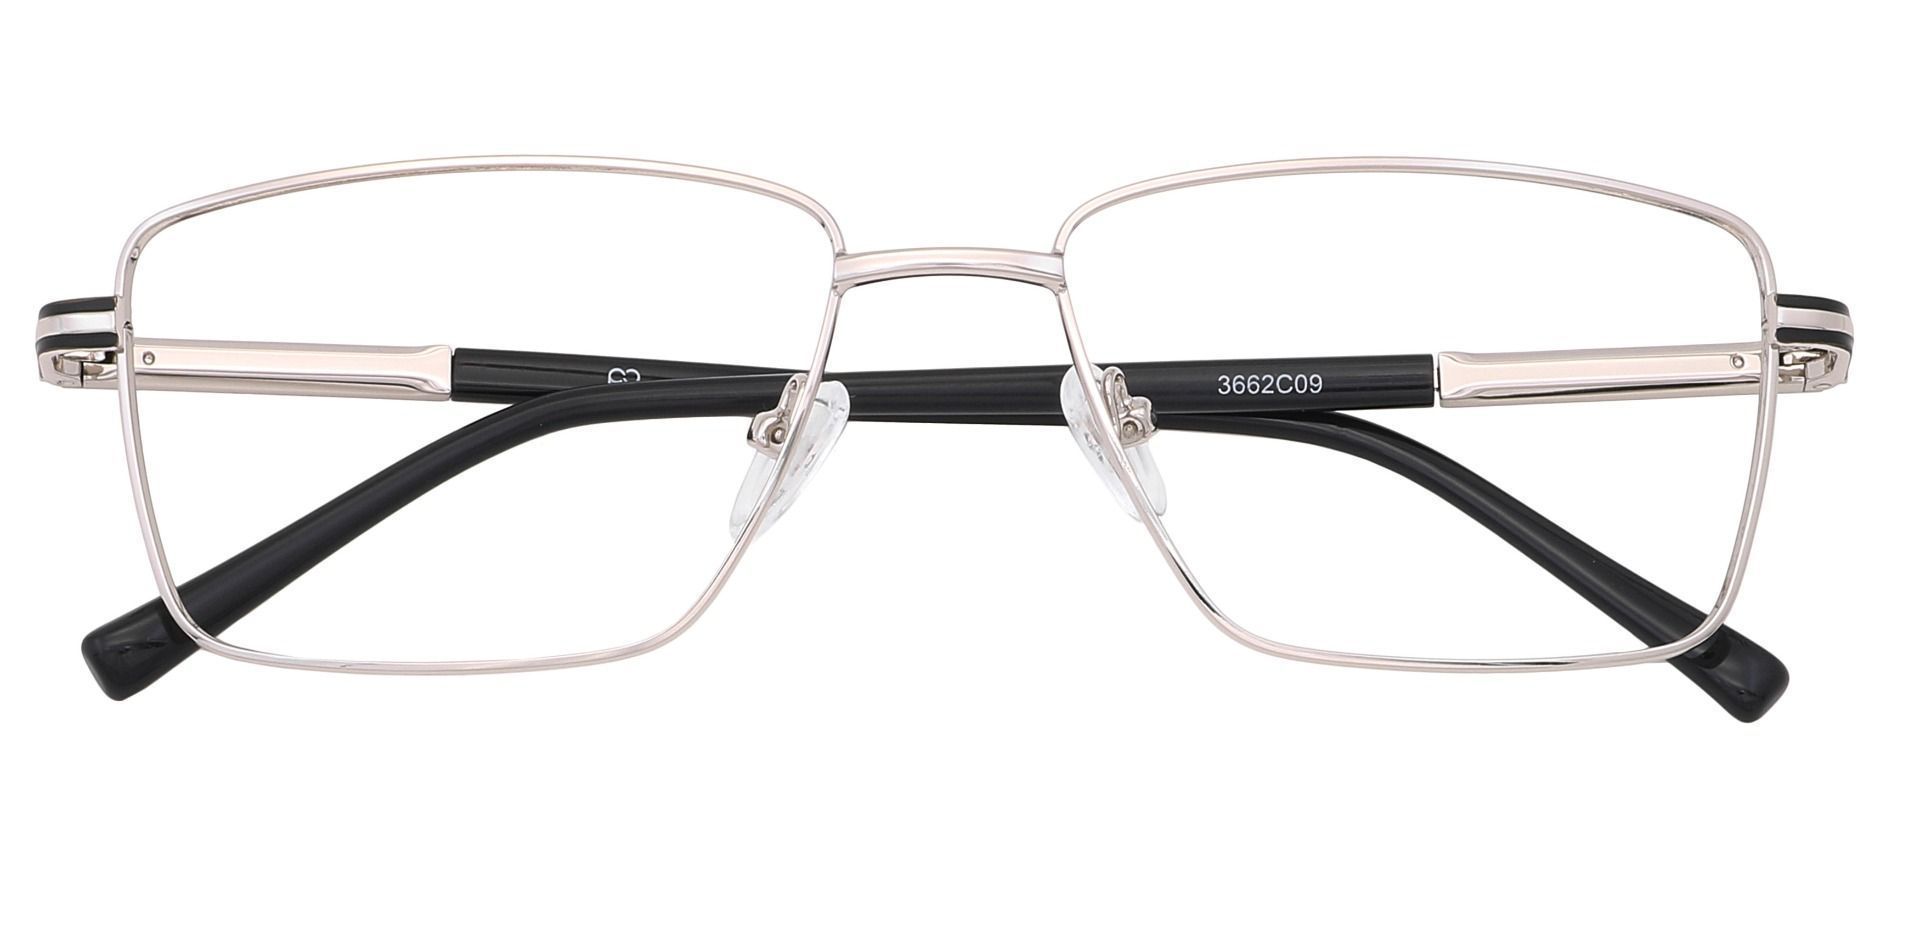 Daniel Rectangle Lined Bifocal Glasses - Silver